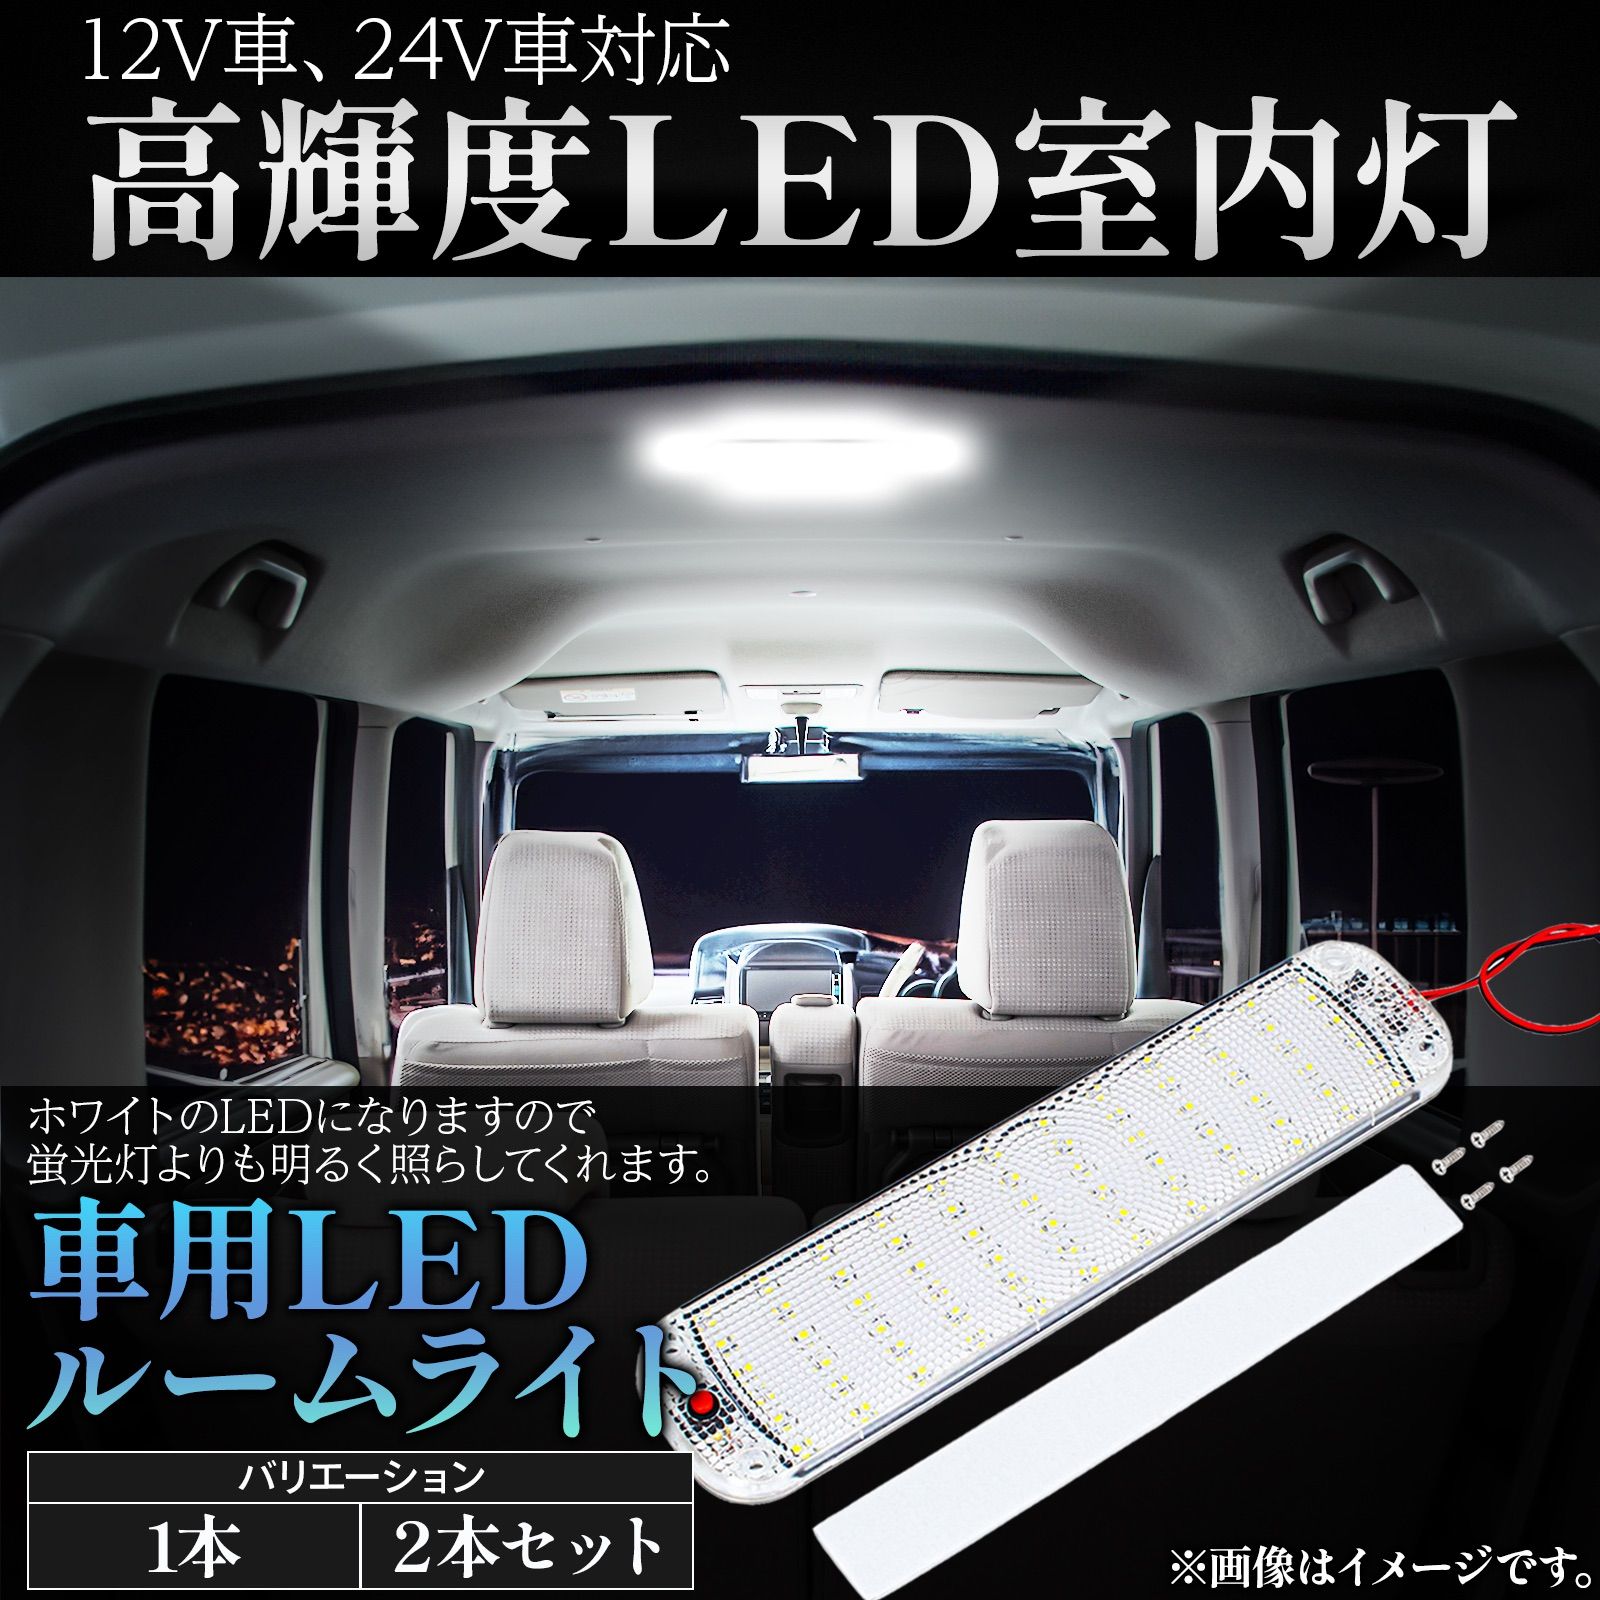 LED 蛍光灯 車内 設置用 ルームランプ 12V 24V 白灯 ホワイト 【再入荷】 - パーツ